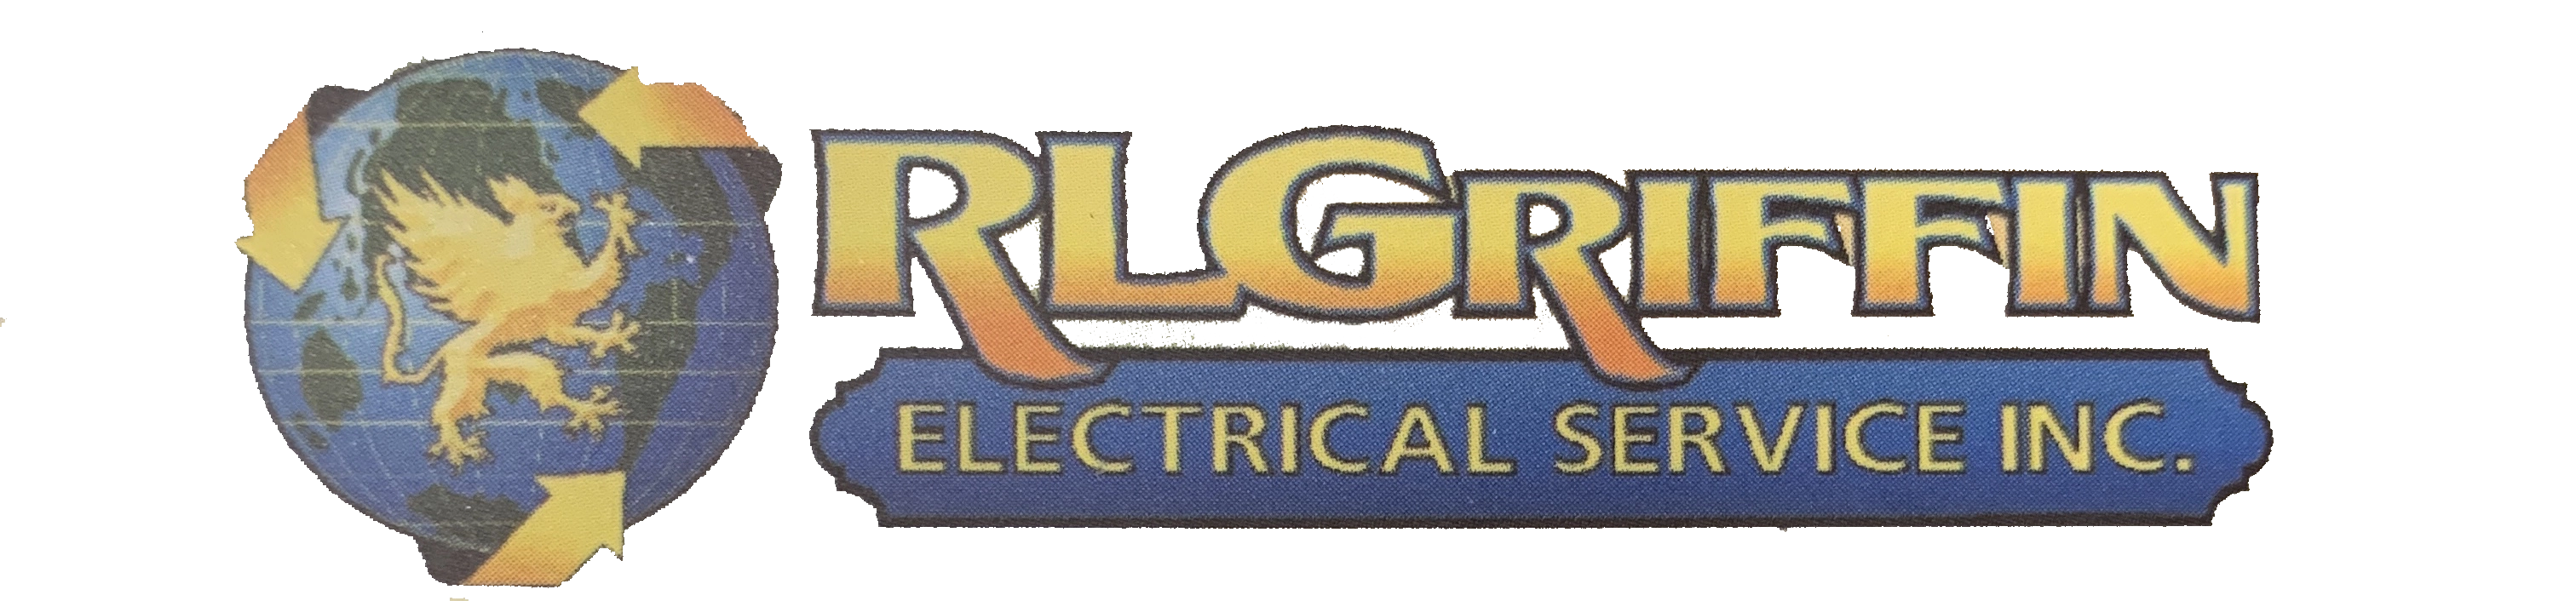 R L Griffin Electrical Services Logo